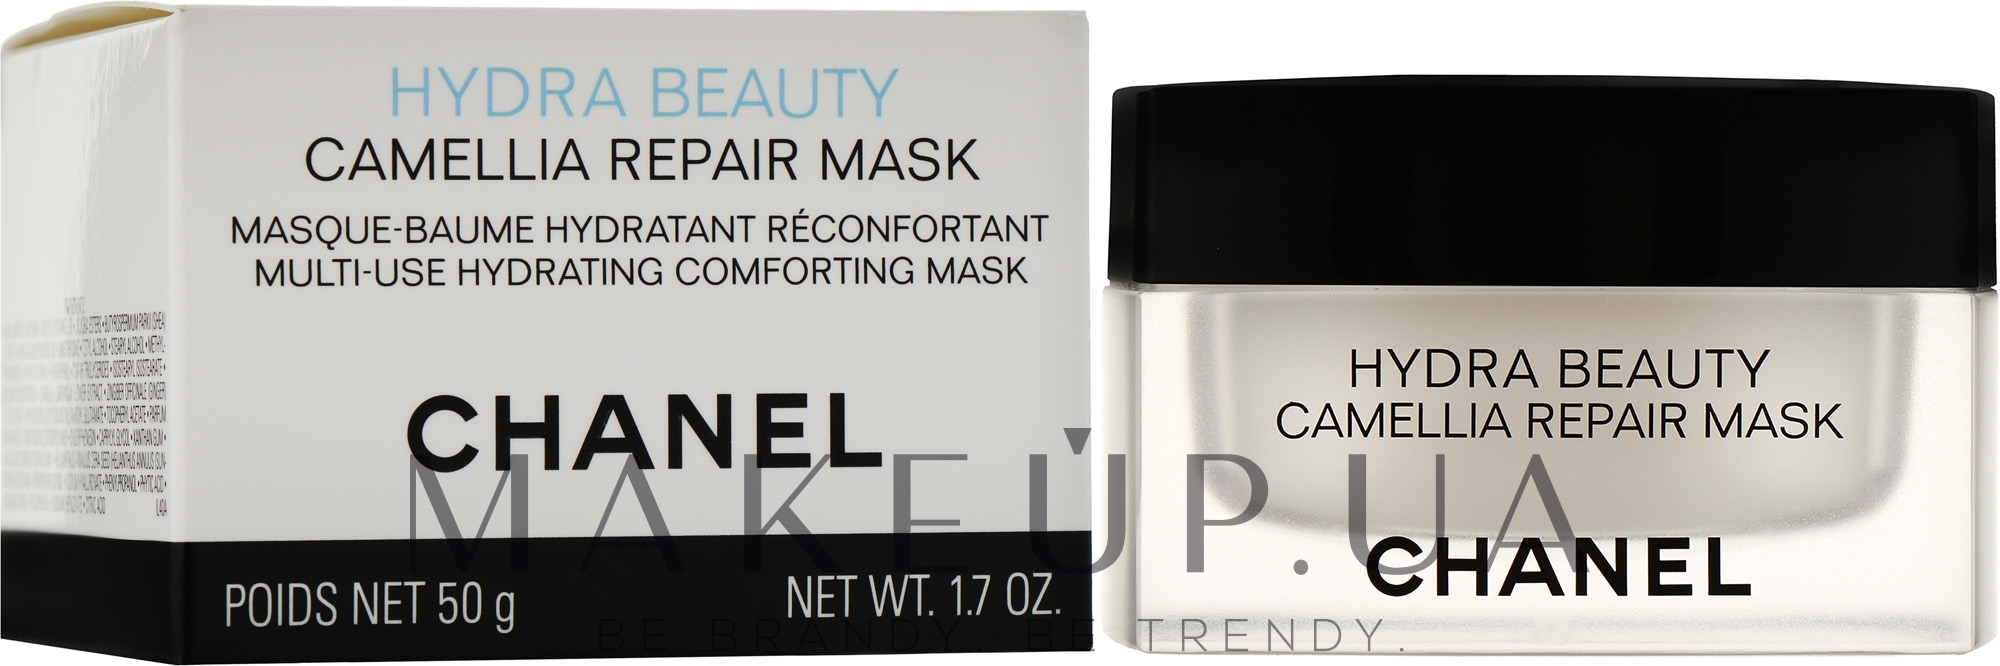 Chanel Hydra Beauty Camellia Repair Mask - Многофункциональная